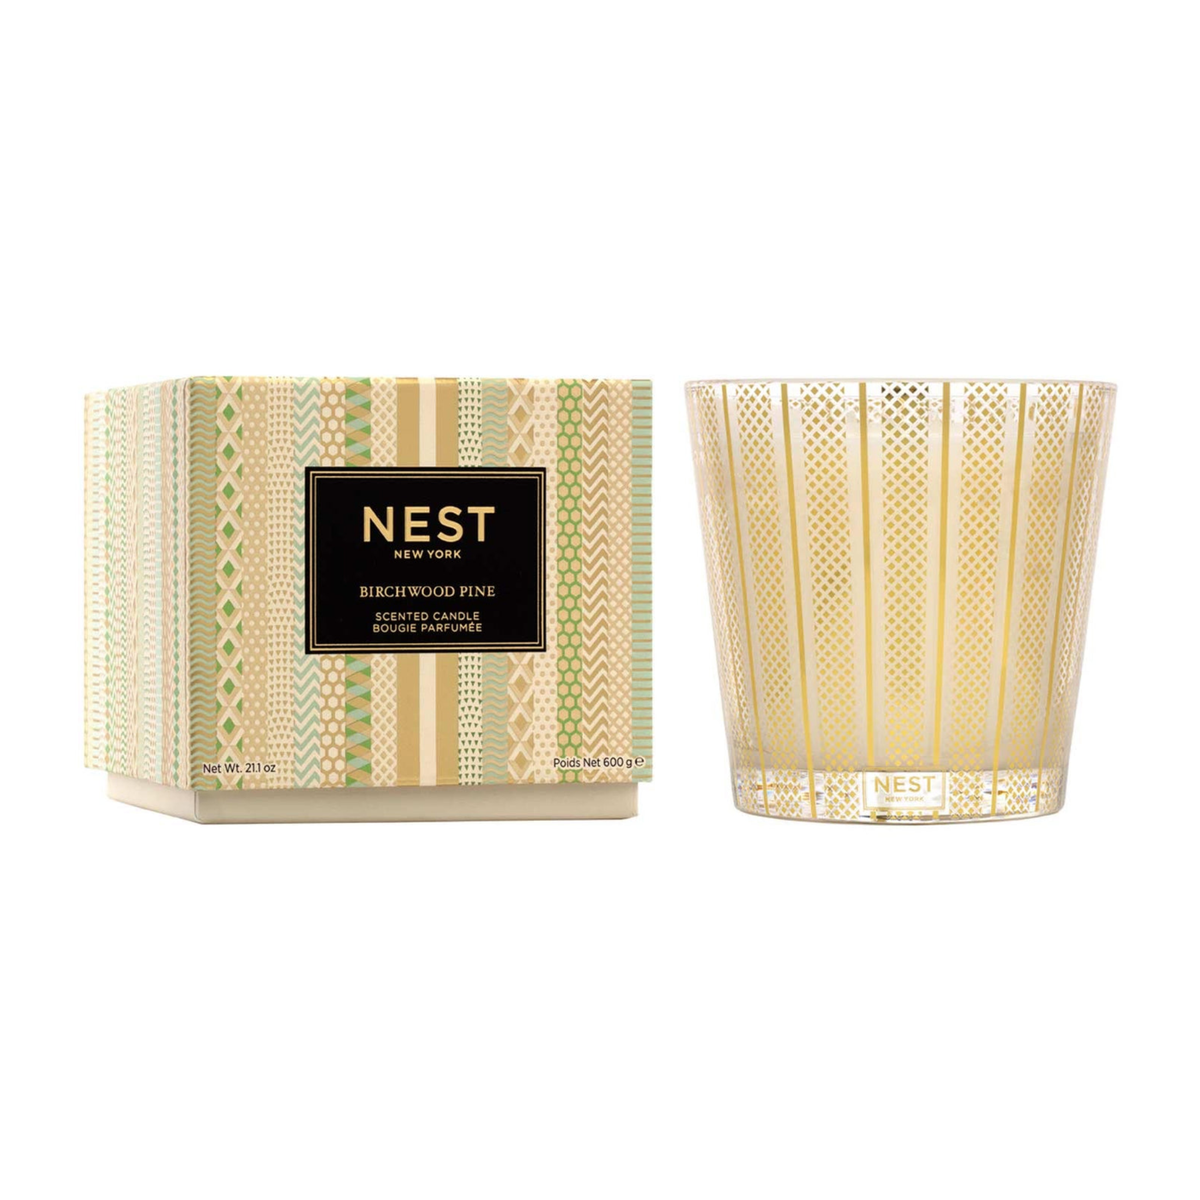 Product Image of Nest New York Birchwood Pine 3-Wick Candle